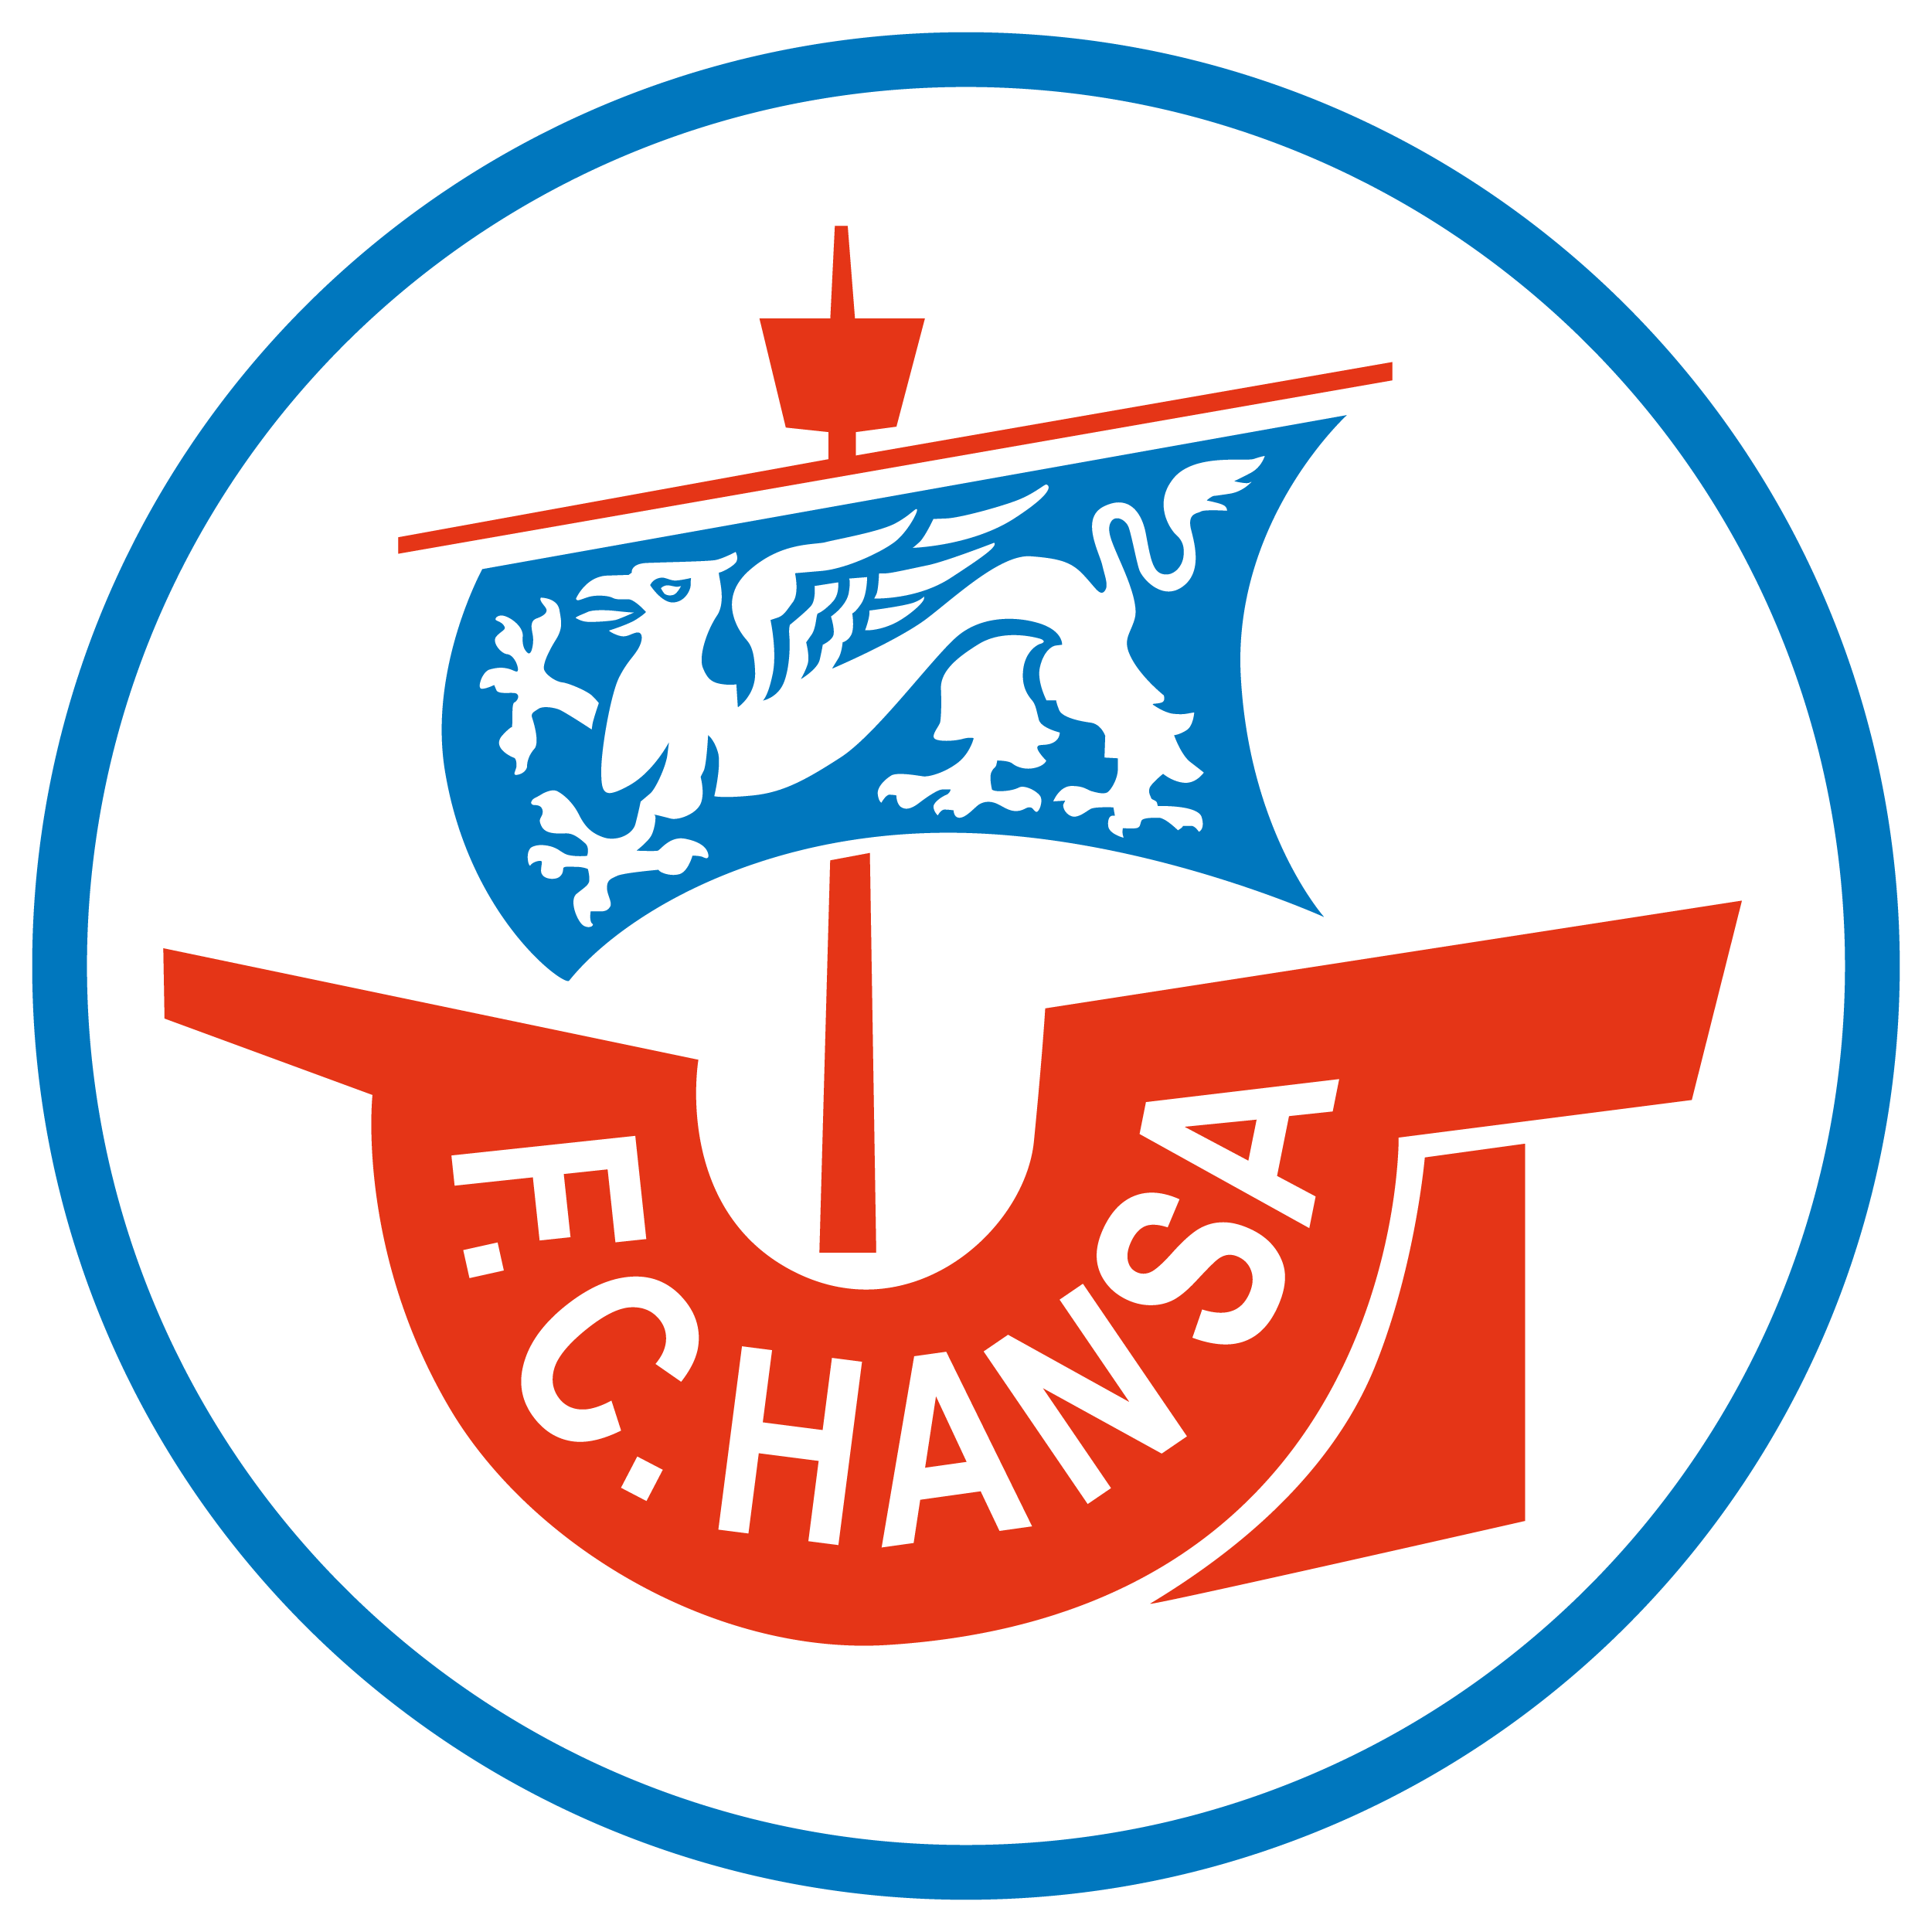 Wappen des F.C. Hansa Rostock